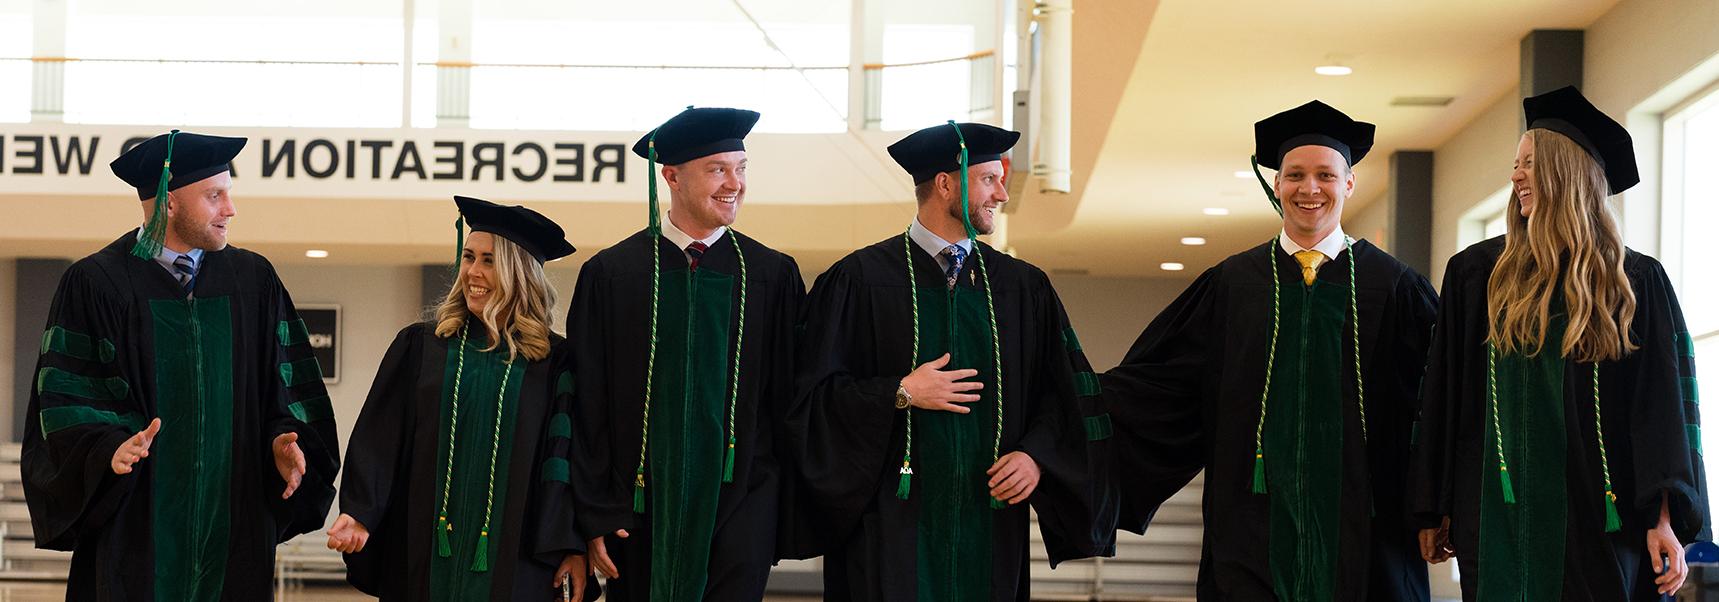 An image of students celebrating graduation